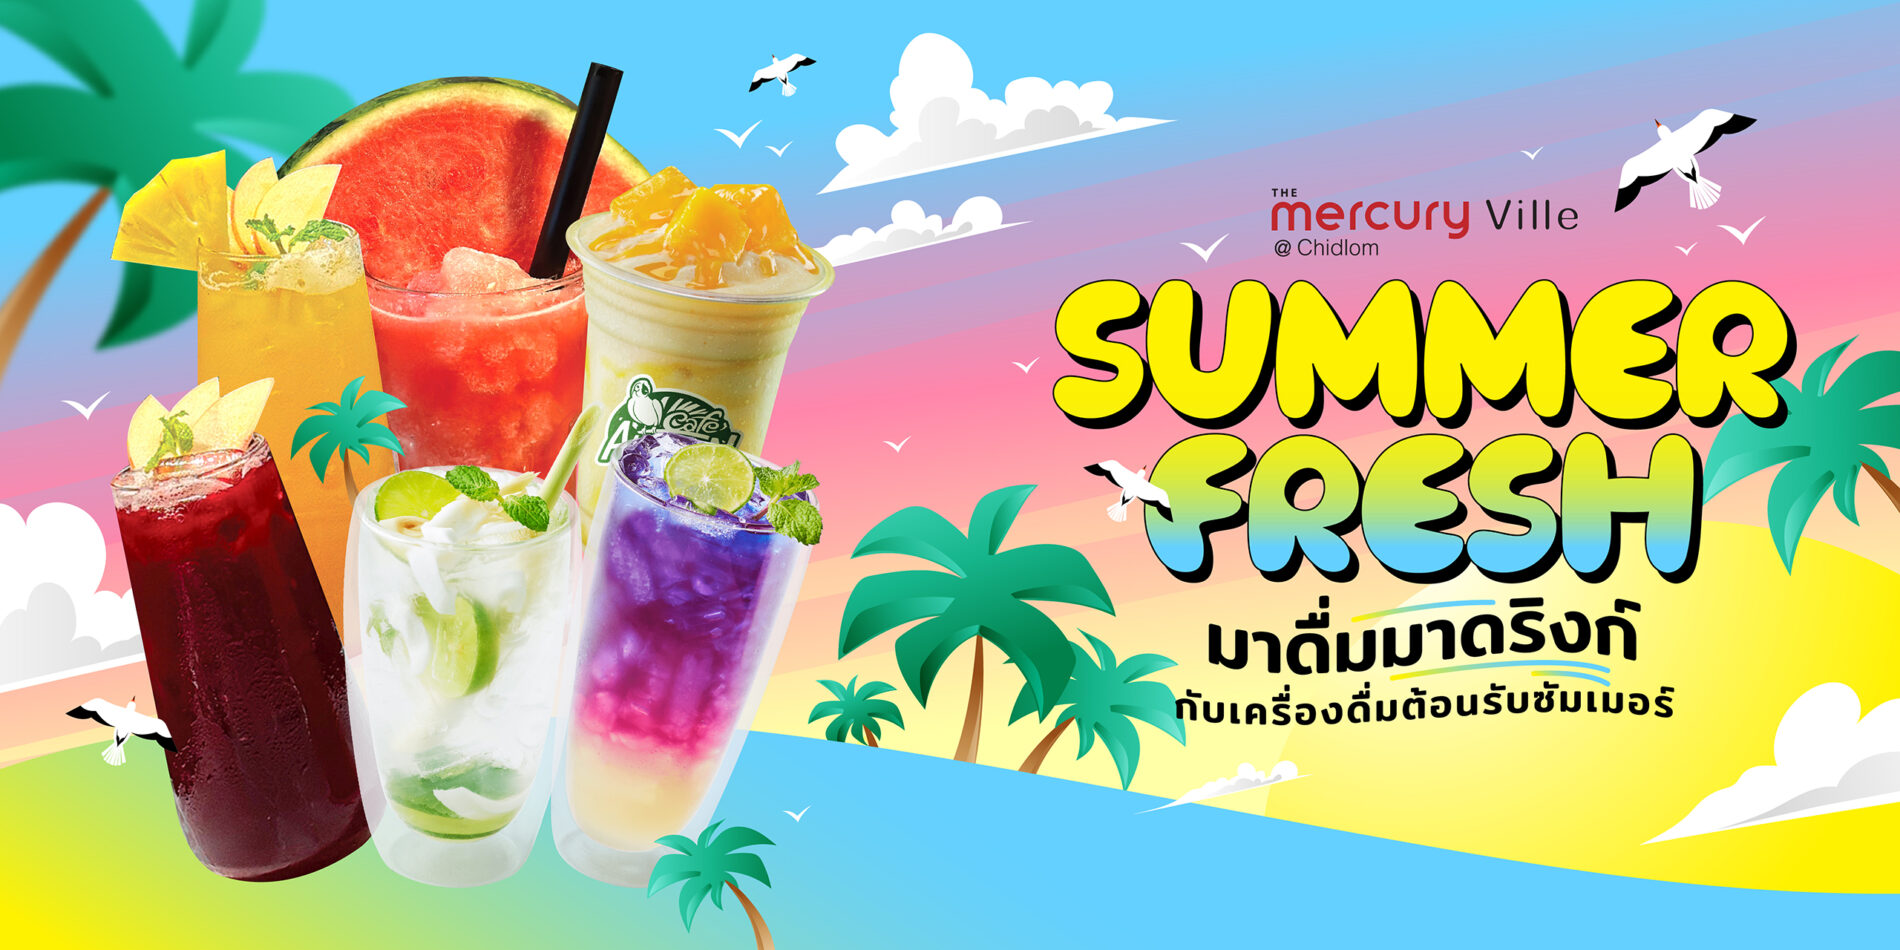 Summer Fresh! มาดื่มมาดริงก์ กับเครื่องดื่มต้อนรับซัมเมอร์ที่ The Mercury Ville @ Chidlom